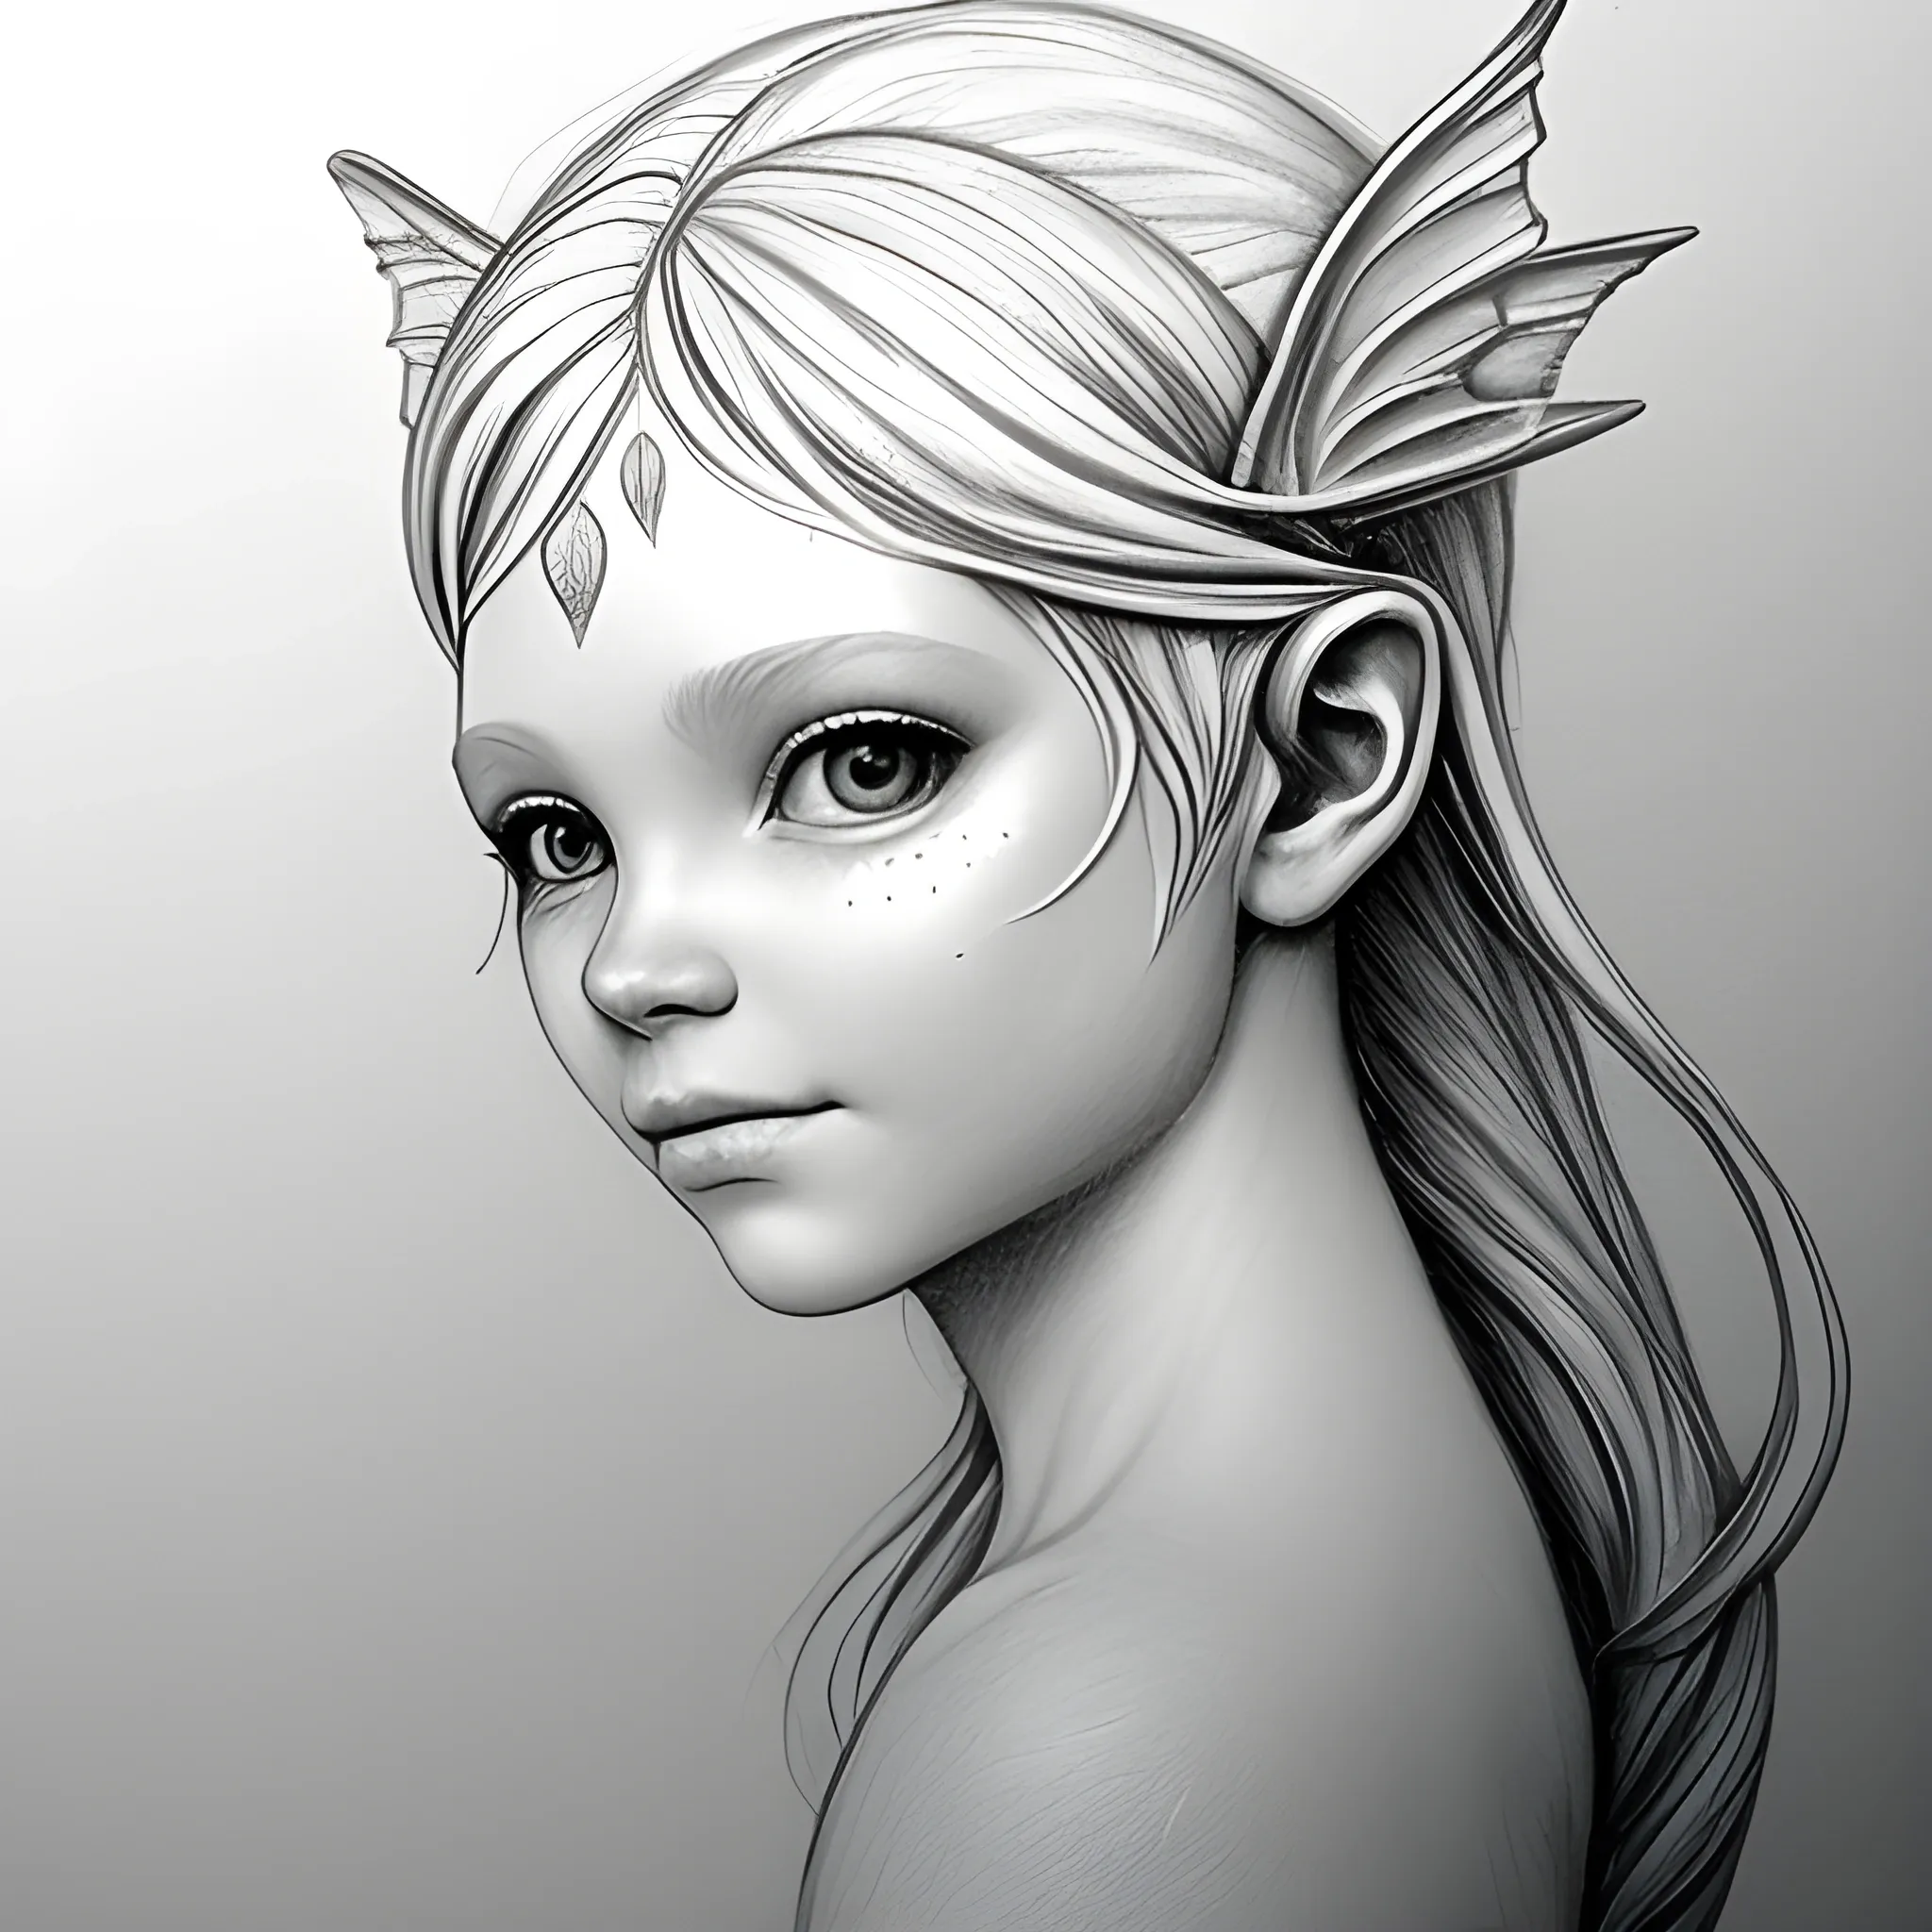 magical fantasy
fairy snook, Pencil Sketch
Add skin tone to skin